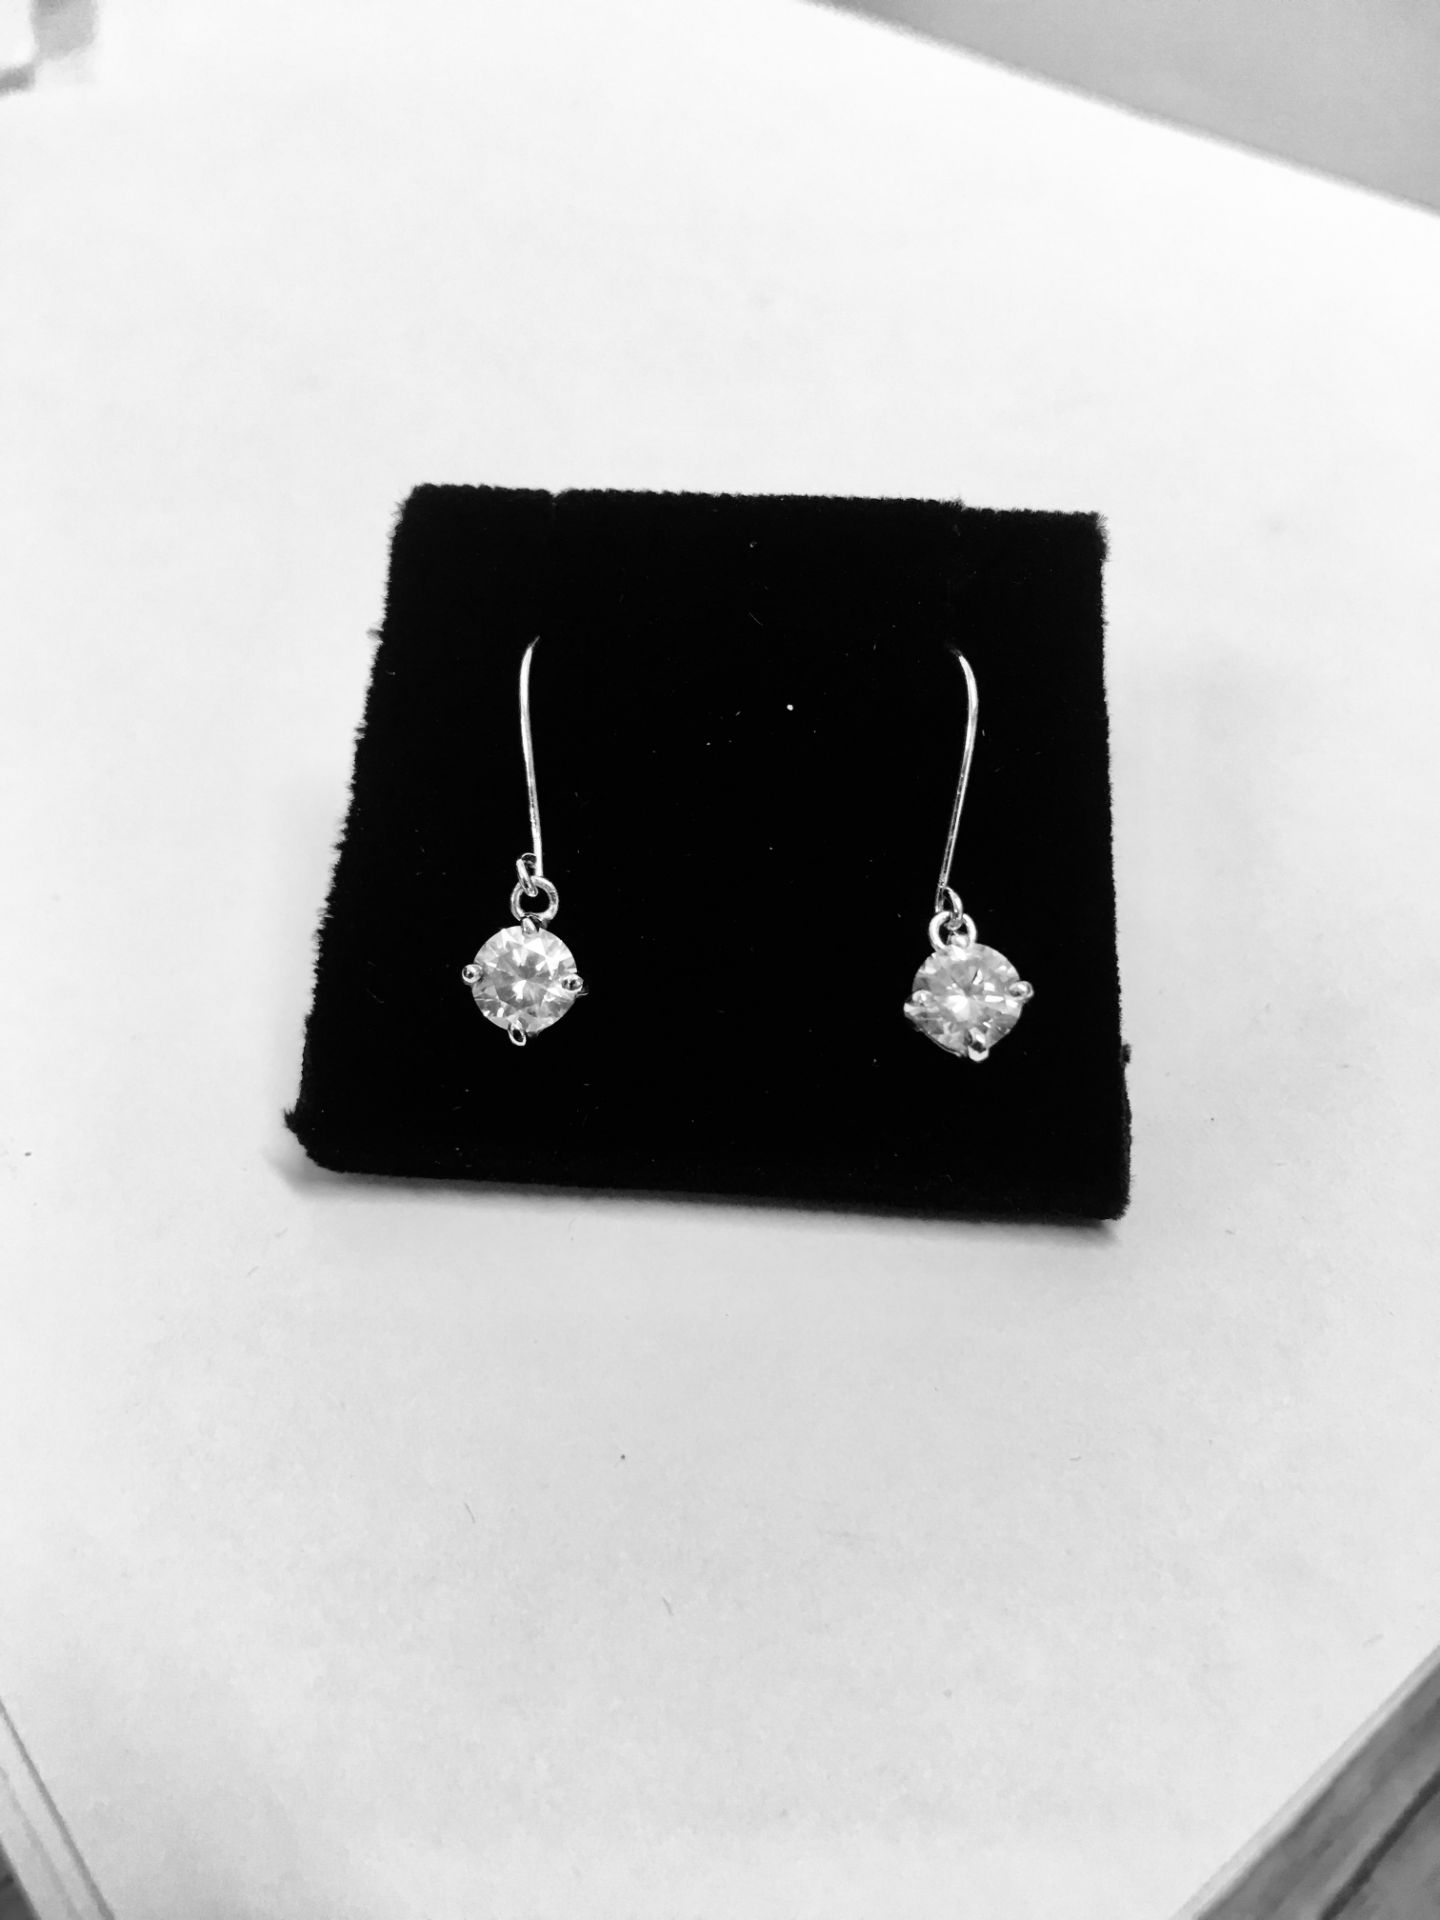 18ct diamond drop earrings 1.00ct total h colour vs enhanced .2gms 18ct 2 gms uk made appraisal - Image 5 of 5